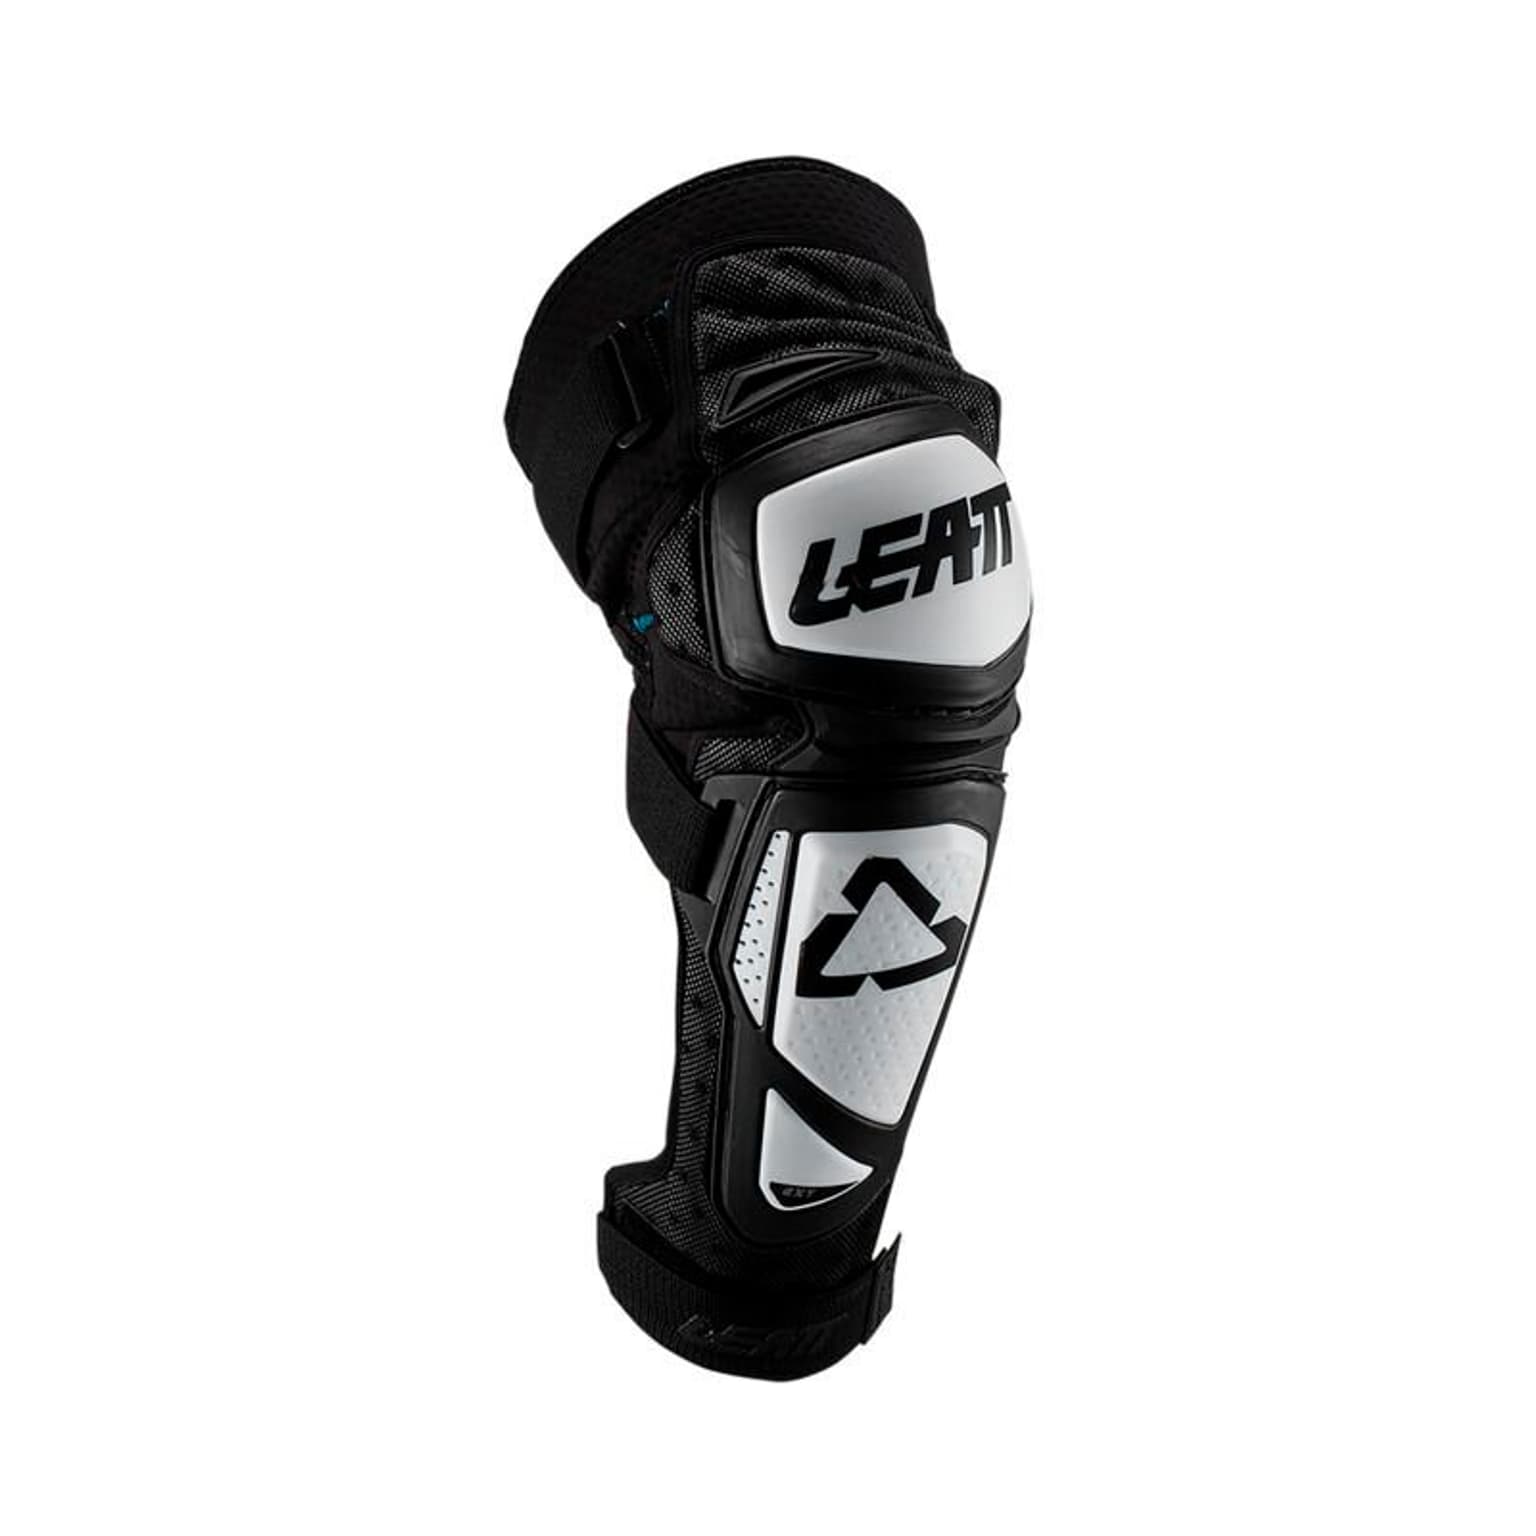 Leatt Leatt knee and shin guard junior Ginocchiere 1